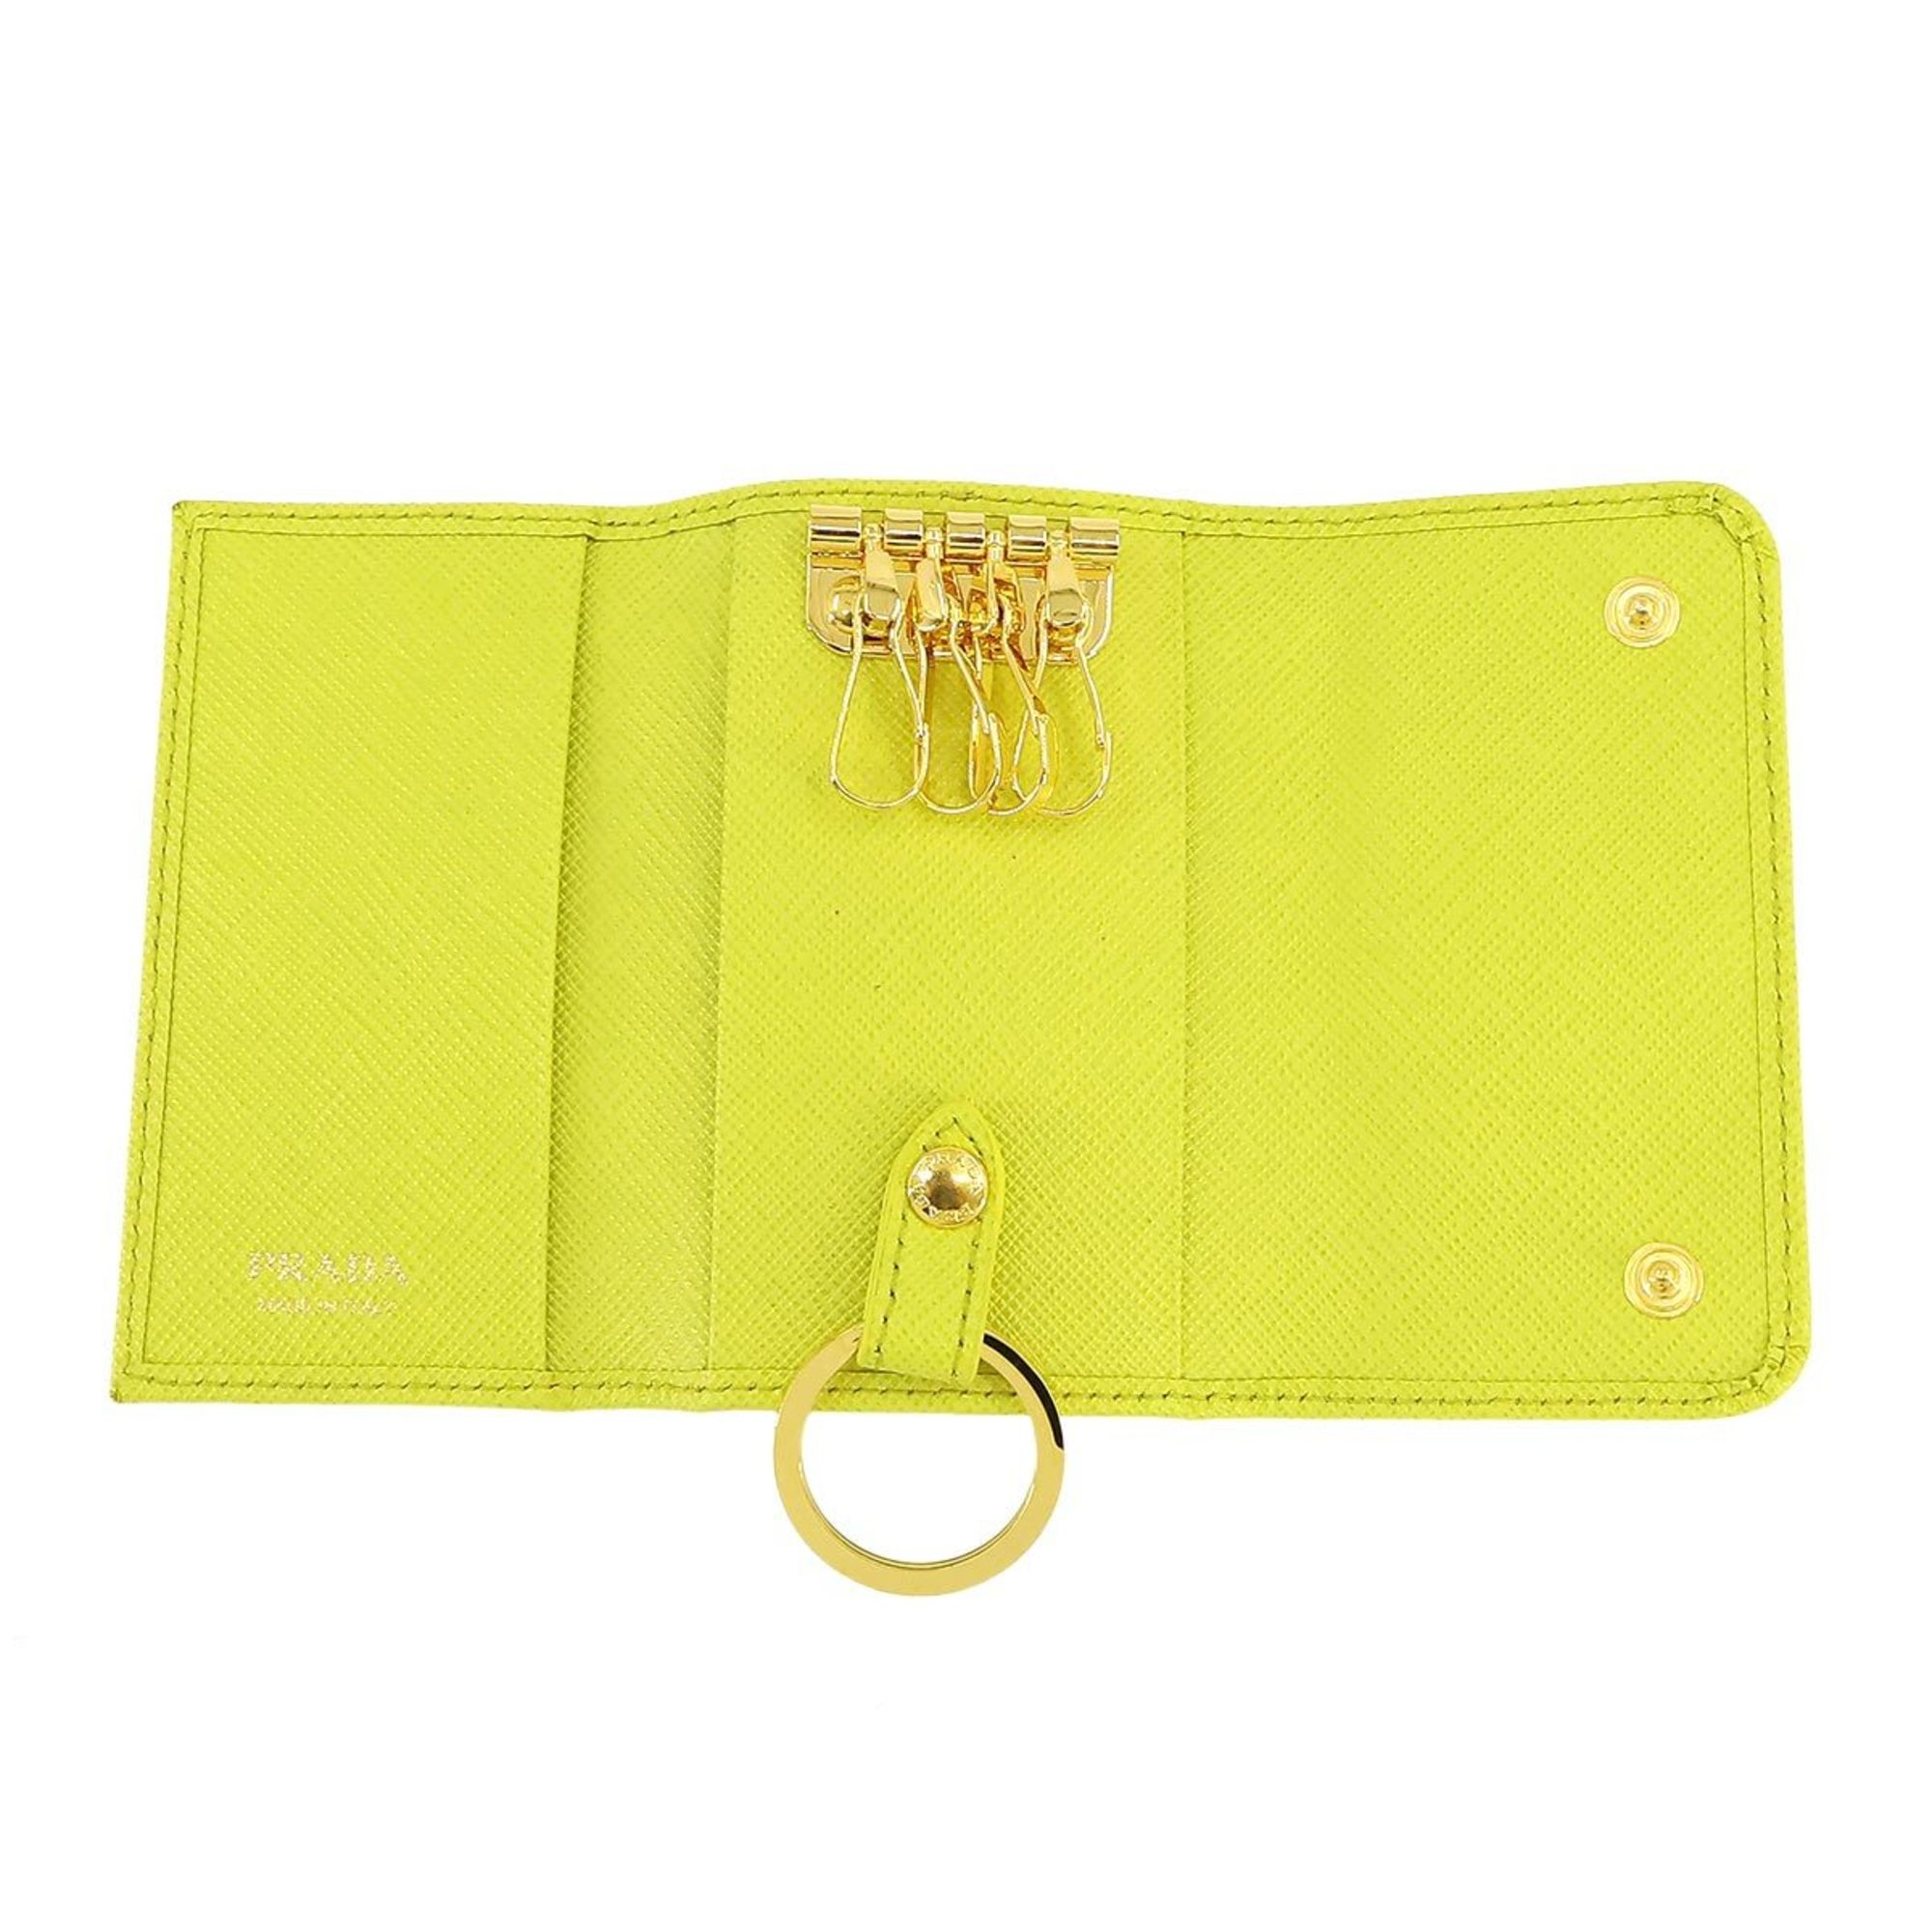 PRADA Key Case Saffiano Leather CEDRO Yellow 1PG004 Gold Hardware